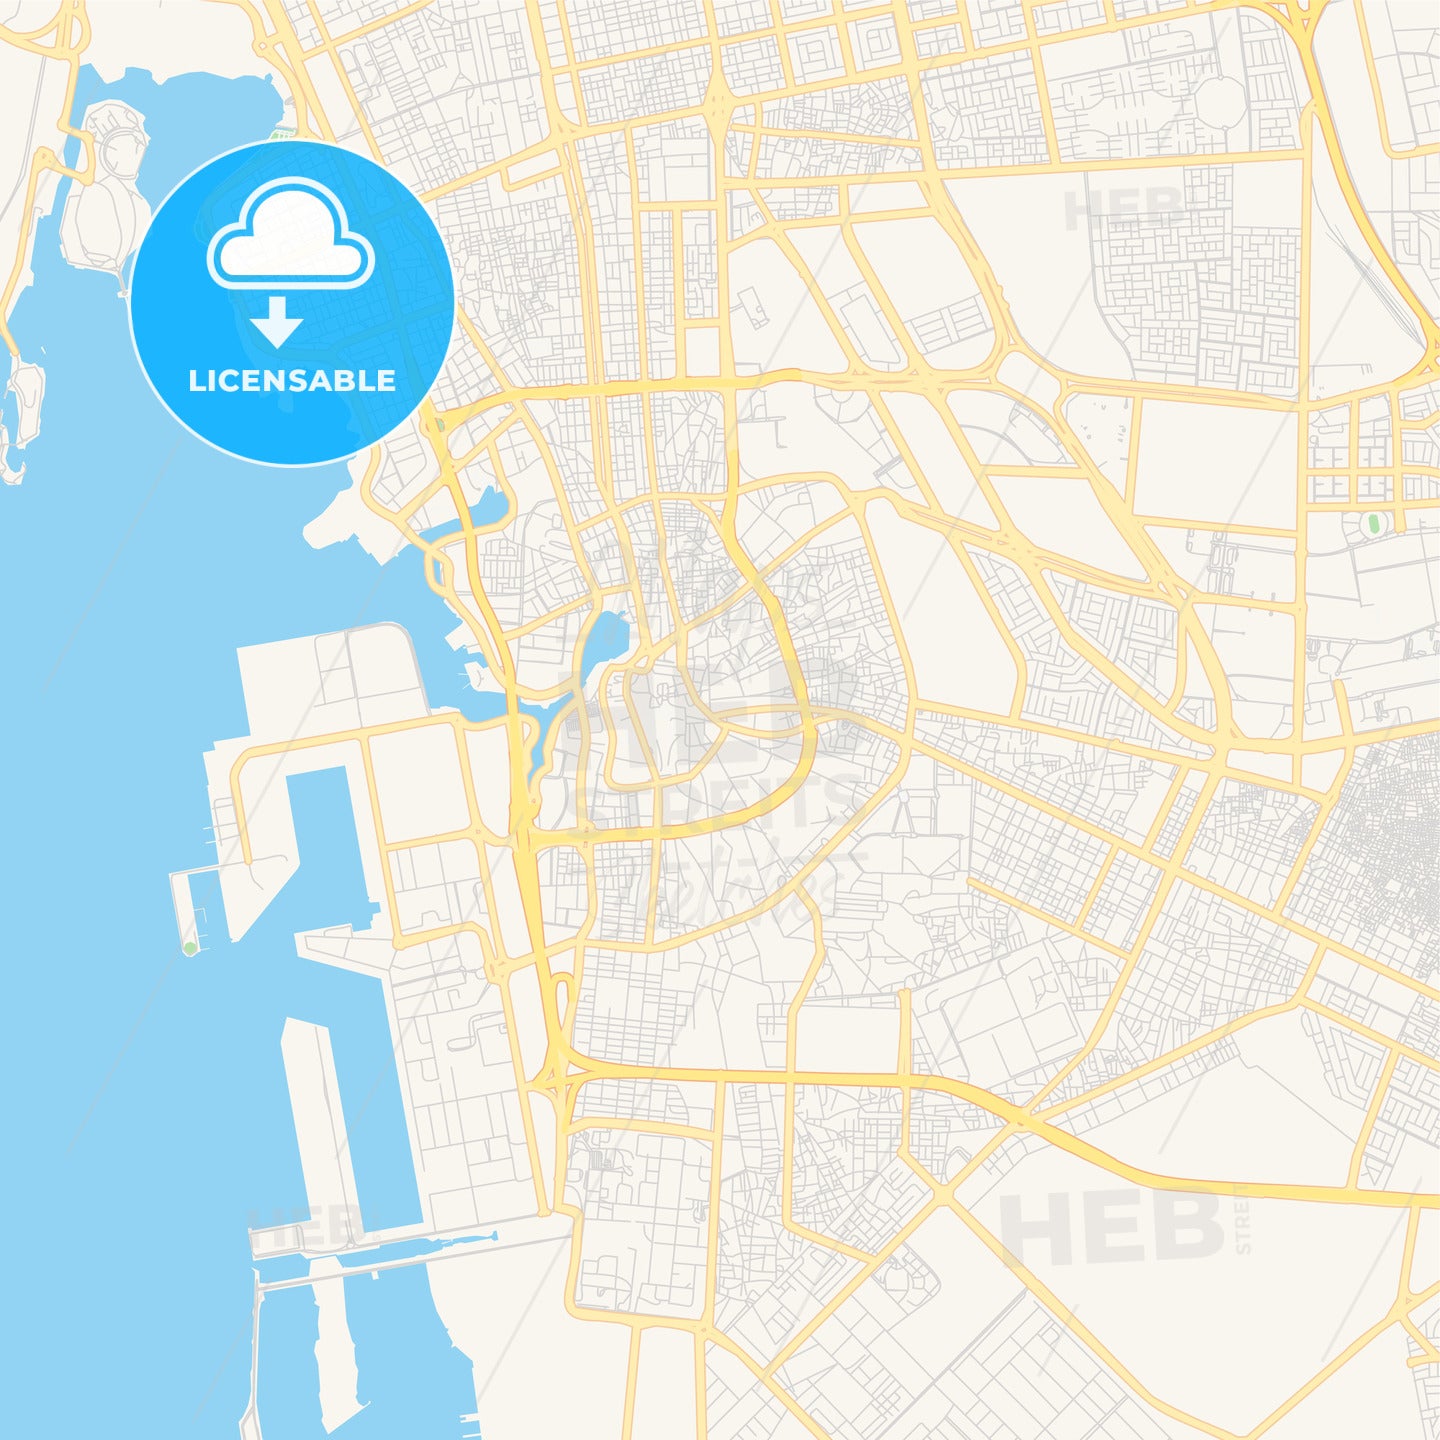 Printable street map of Jeddah, Saudi Arabia